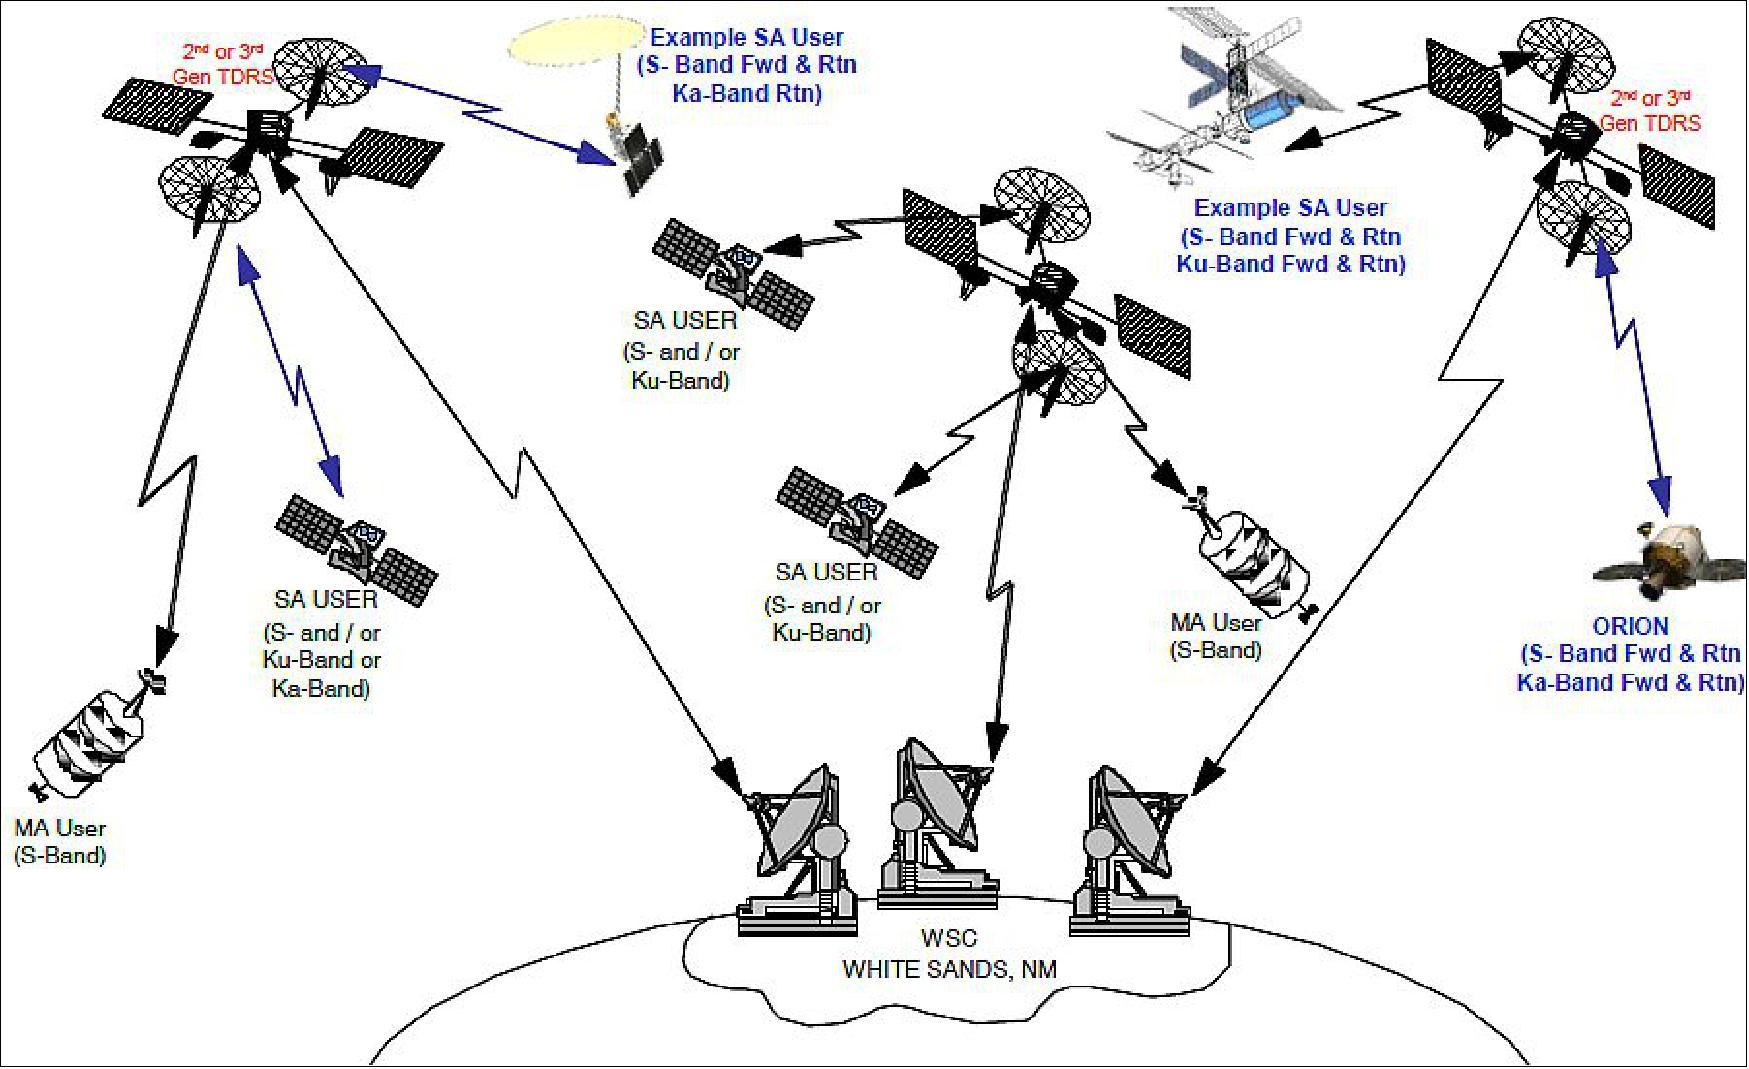 Figure 15: Overview of the NASA SN (image credit: NASA)